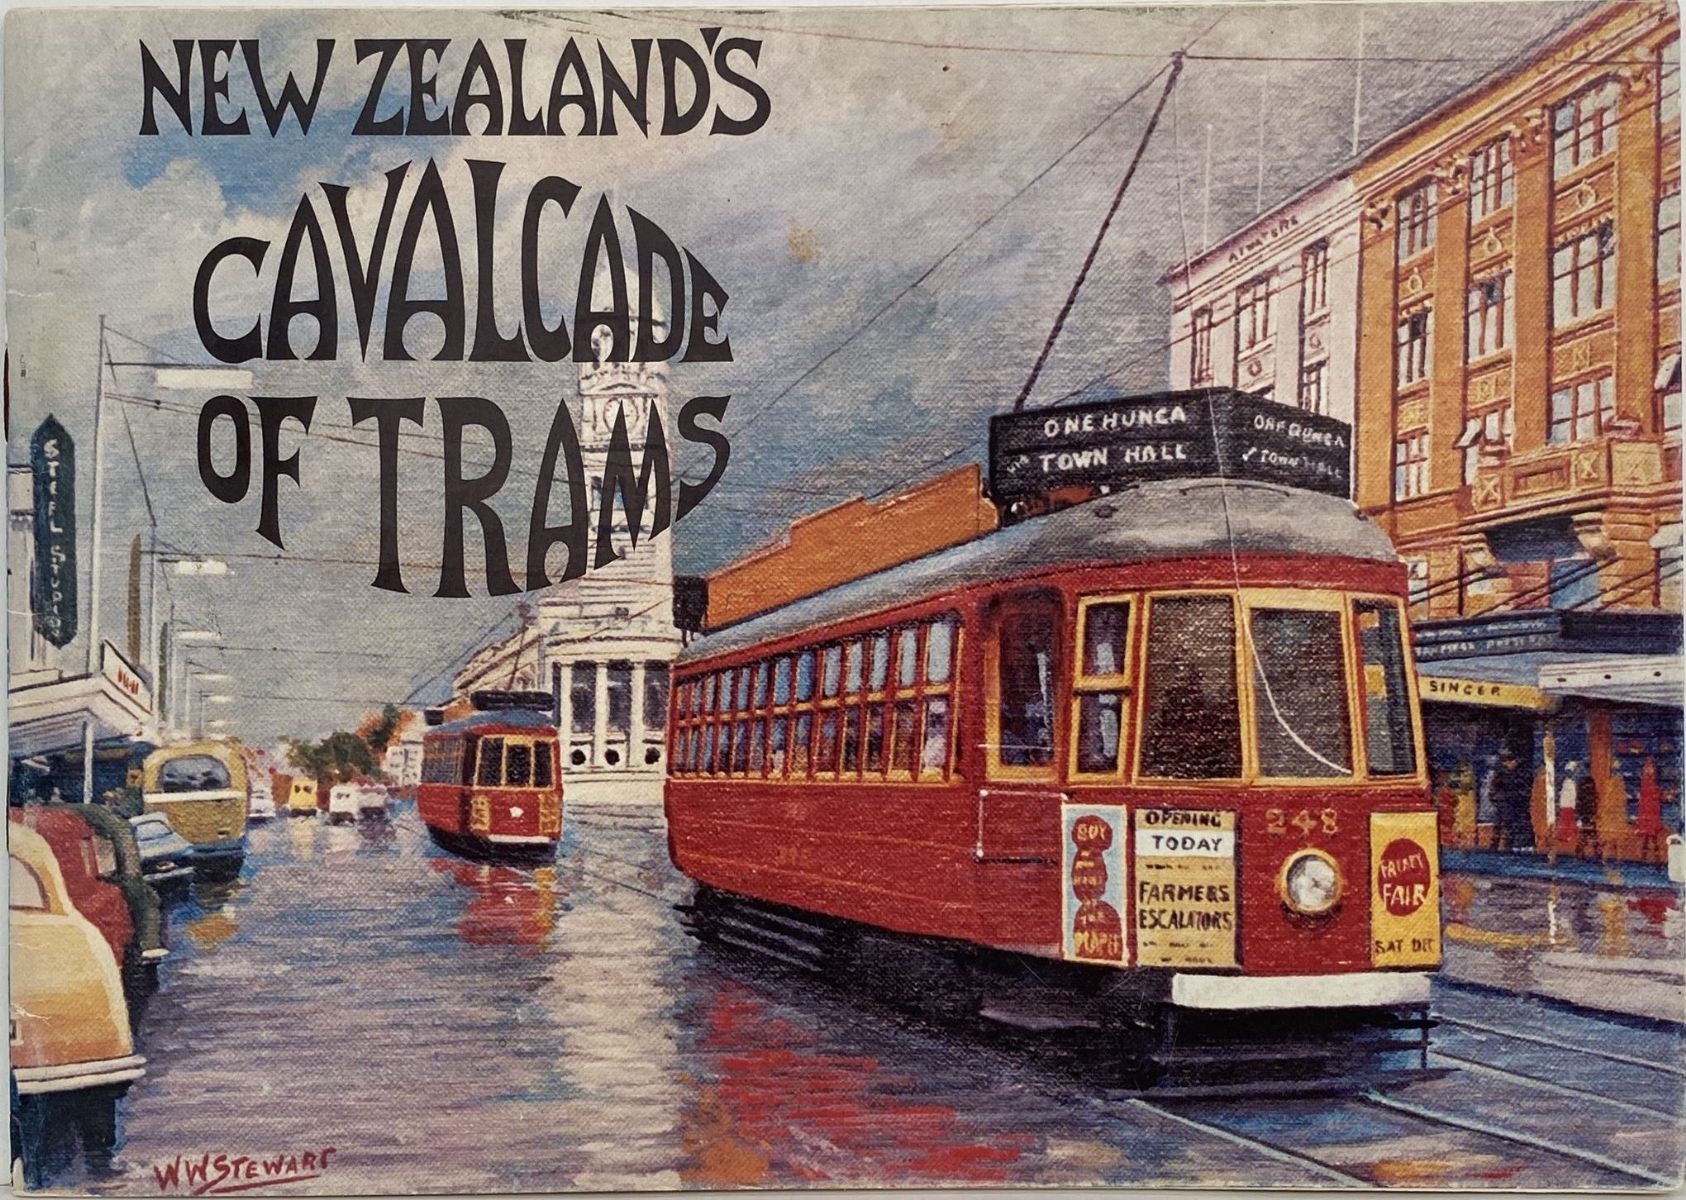 NEW ZEALAND'S CAVALCADE OF TRAMS